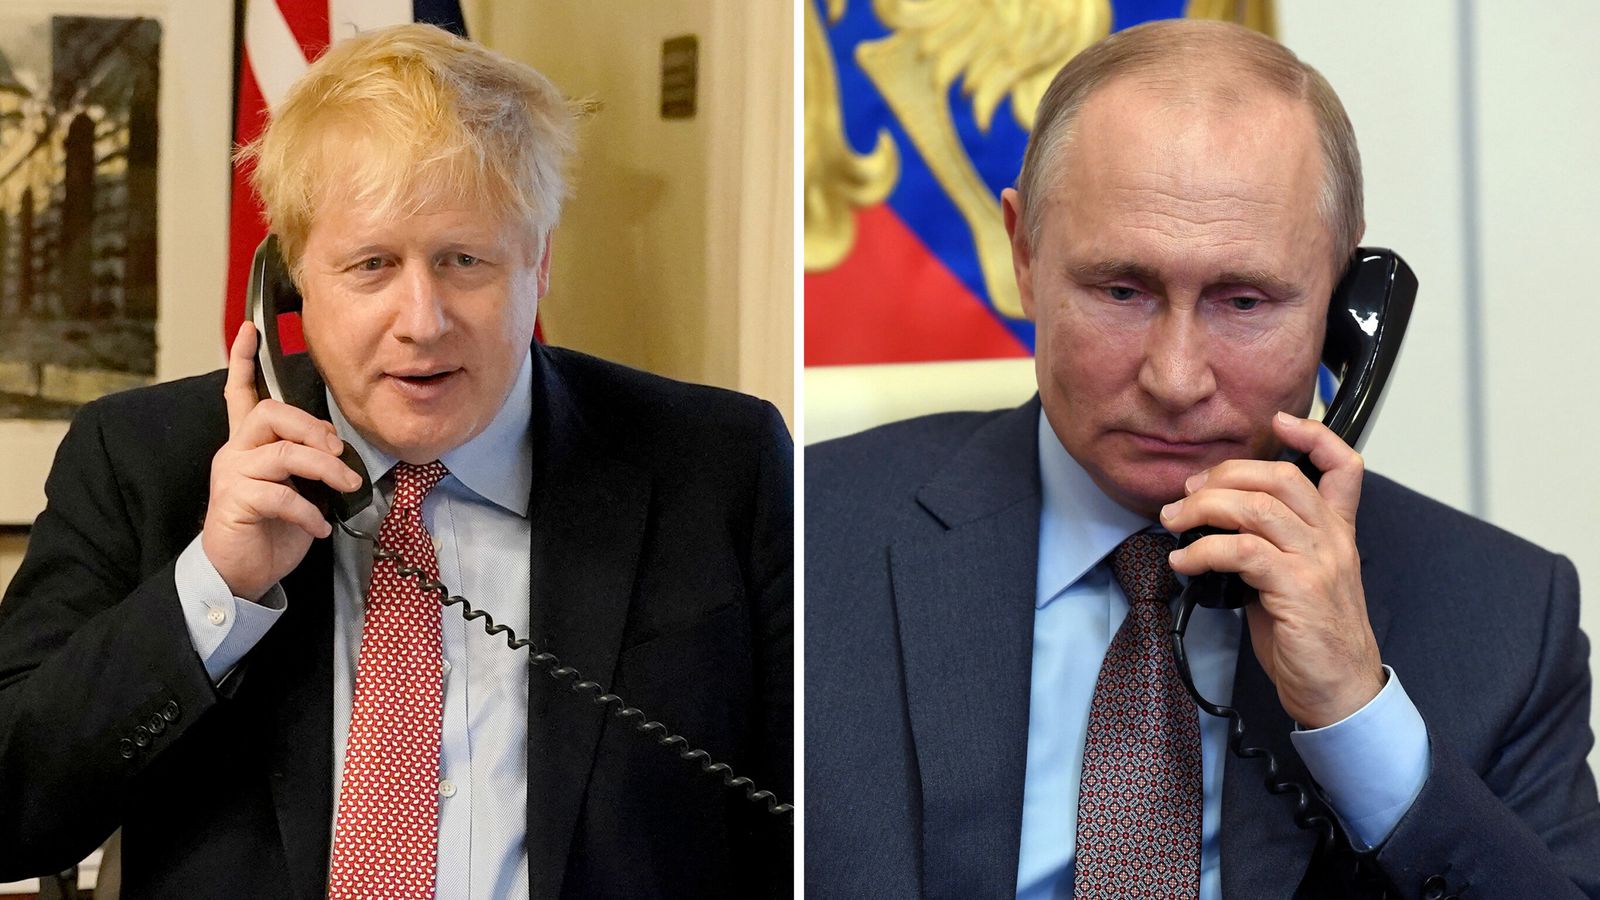 Boris Johnson claims Vladimir Putin threatened to kill him with missile in call ahead of Russian invasion of Ukraine